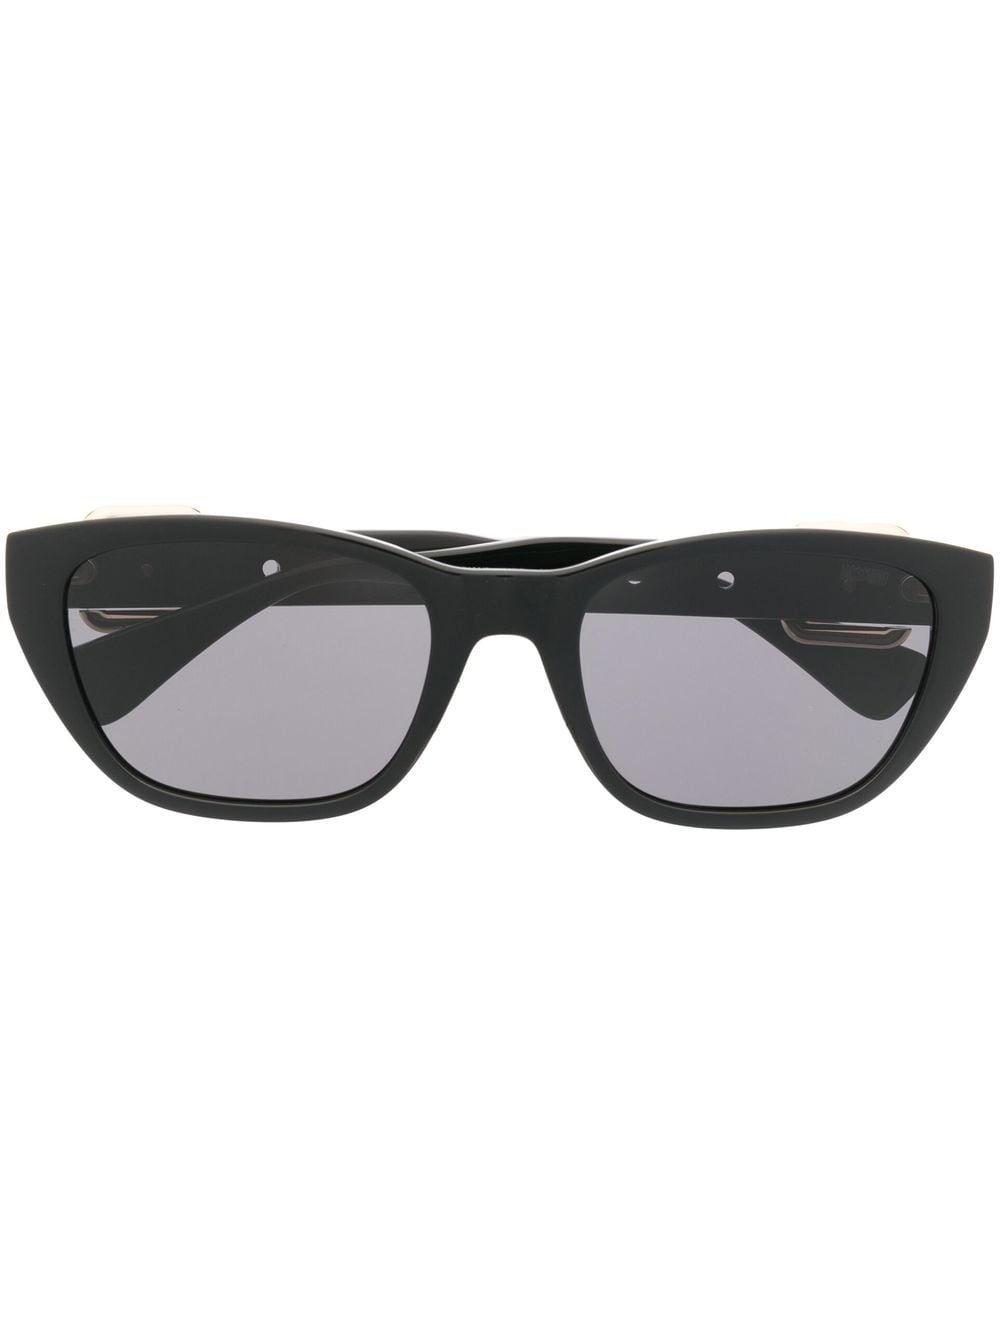 buckle-detail cat-eye sunglasses